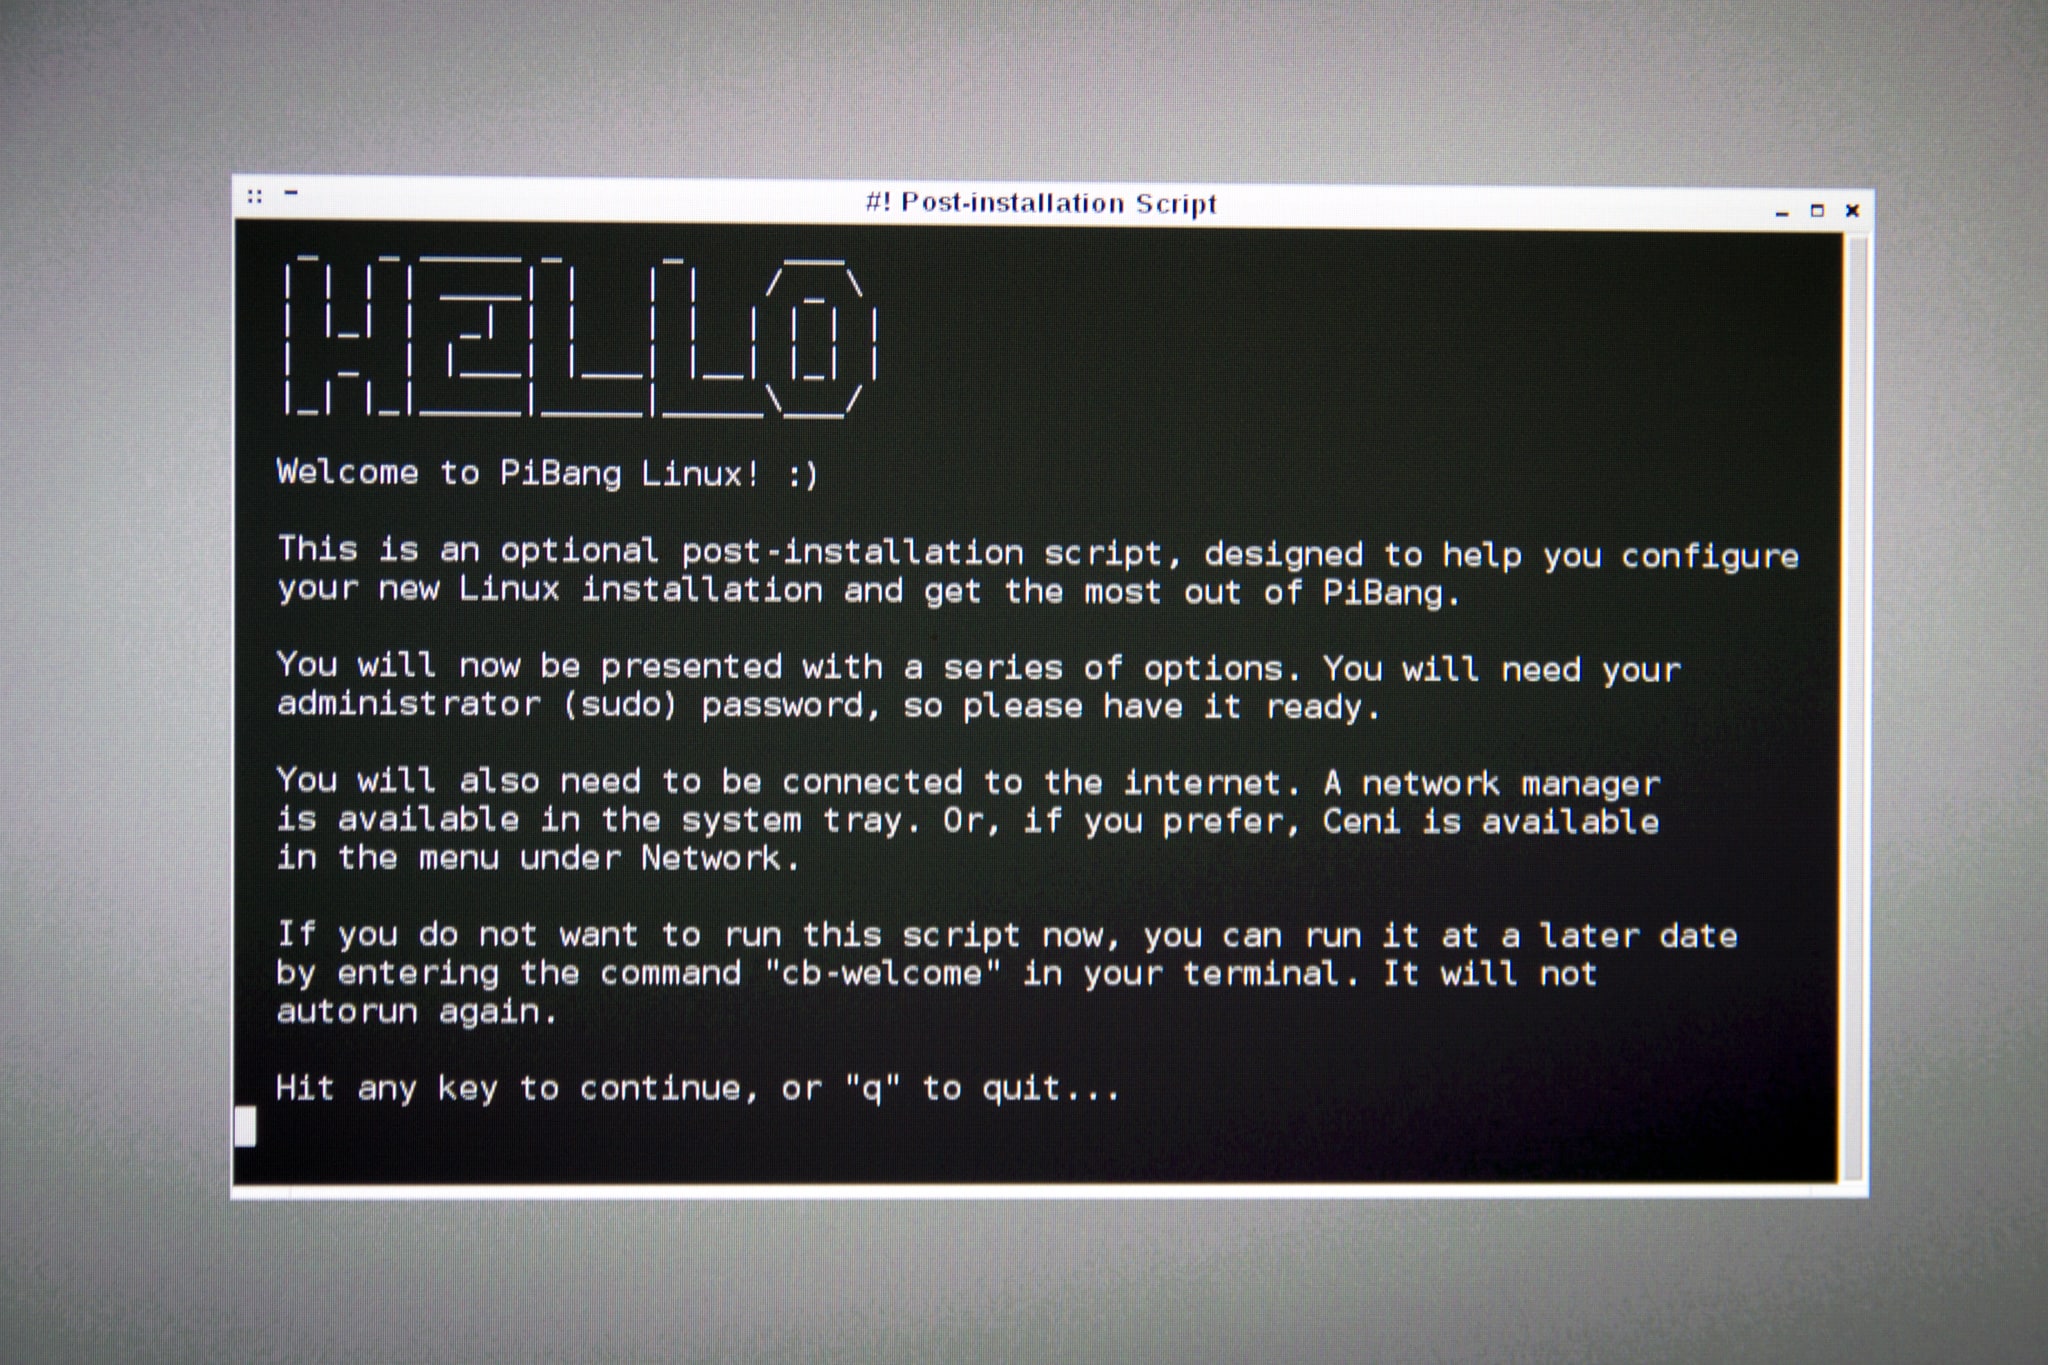 PiBang Linux Post-installation Script